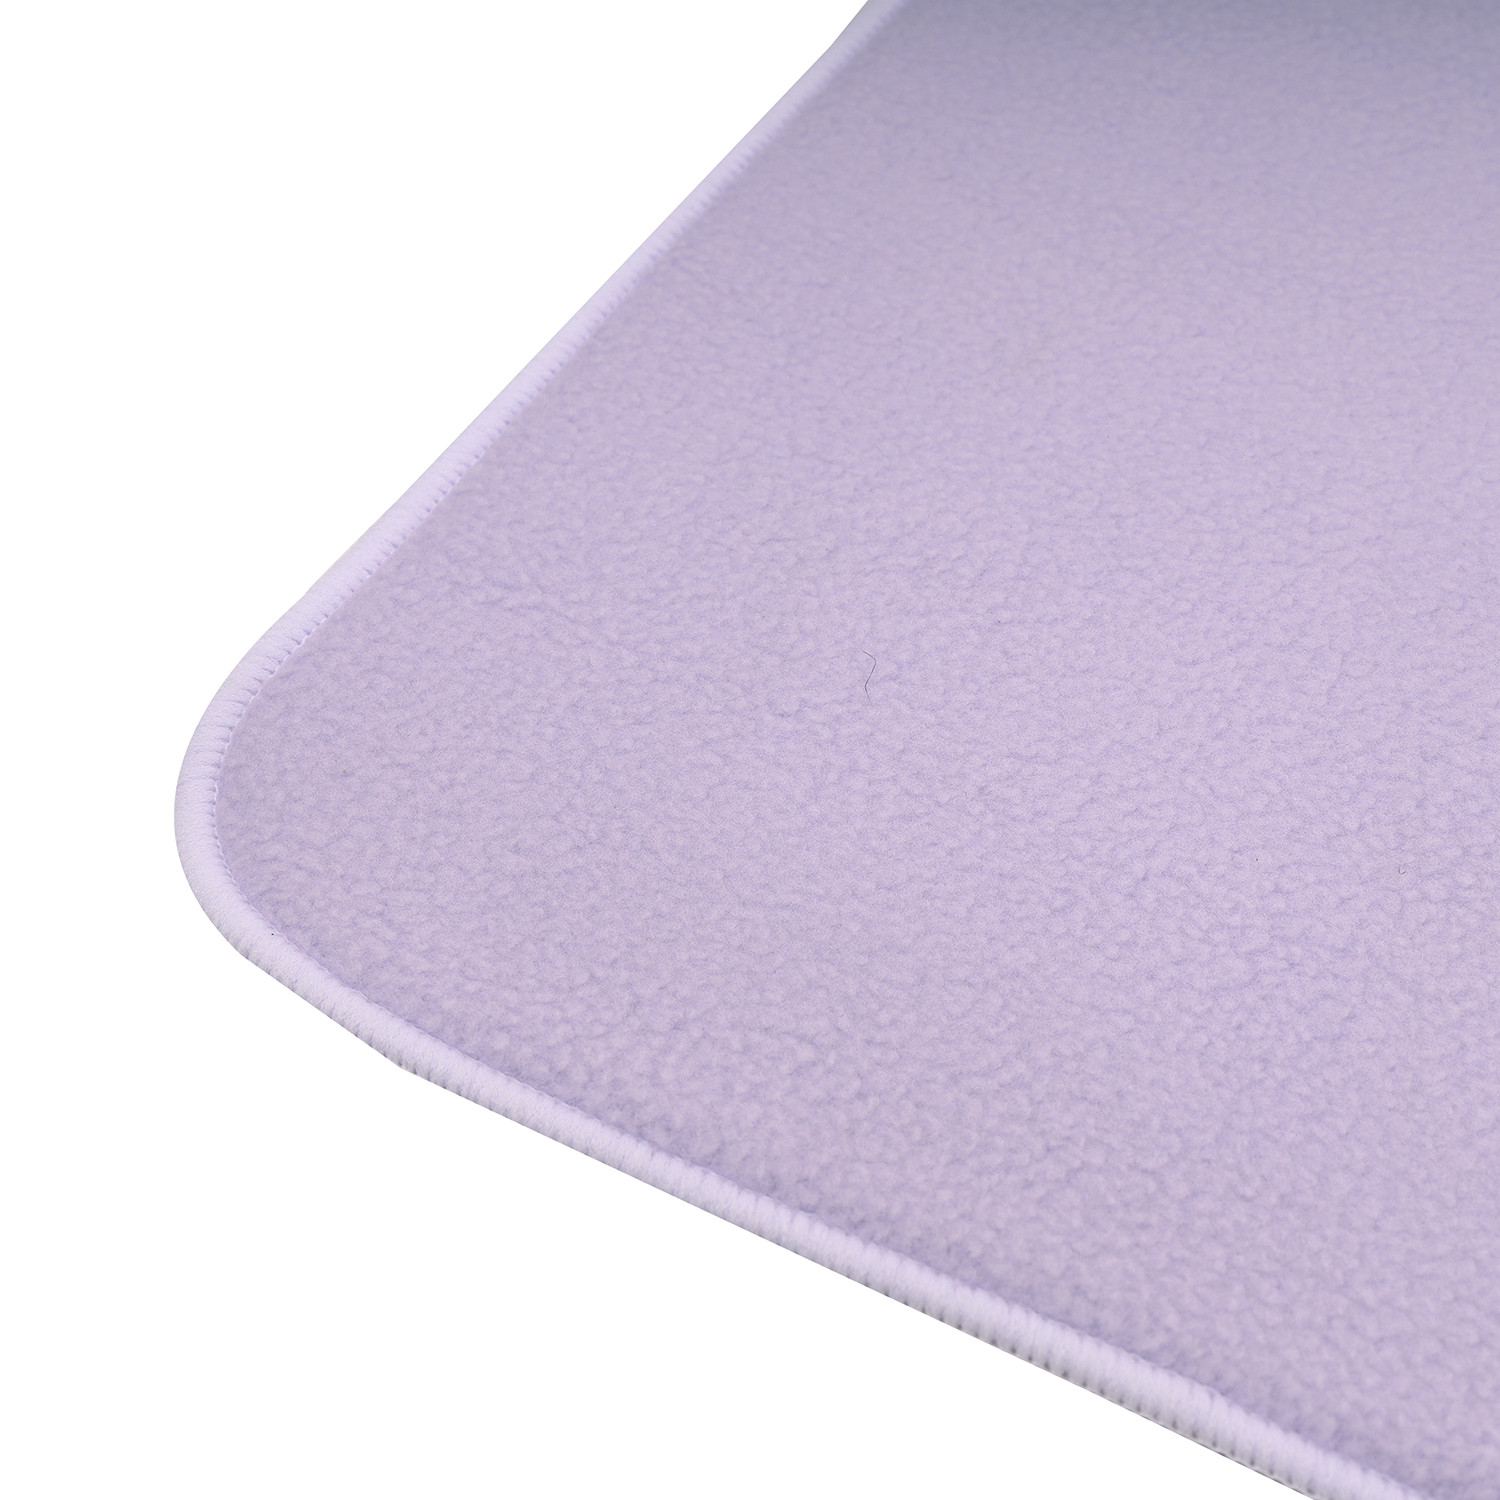 Kuber Industries Dish Dry Mat | Microfiber Drying Mat | Reversible Kitchen Drying Mat | Absorbent Mat | Kitchen Dish Dry Mat | 50x70 | Pack of 2 | Blue & Light Purple